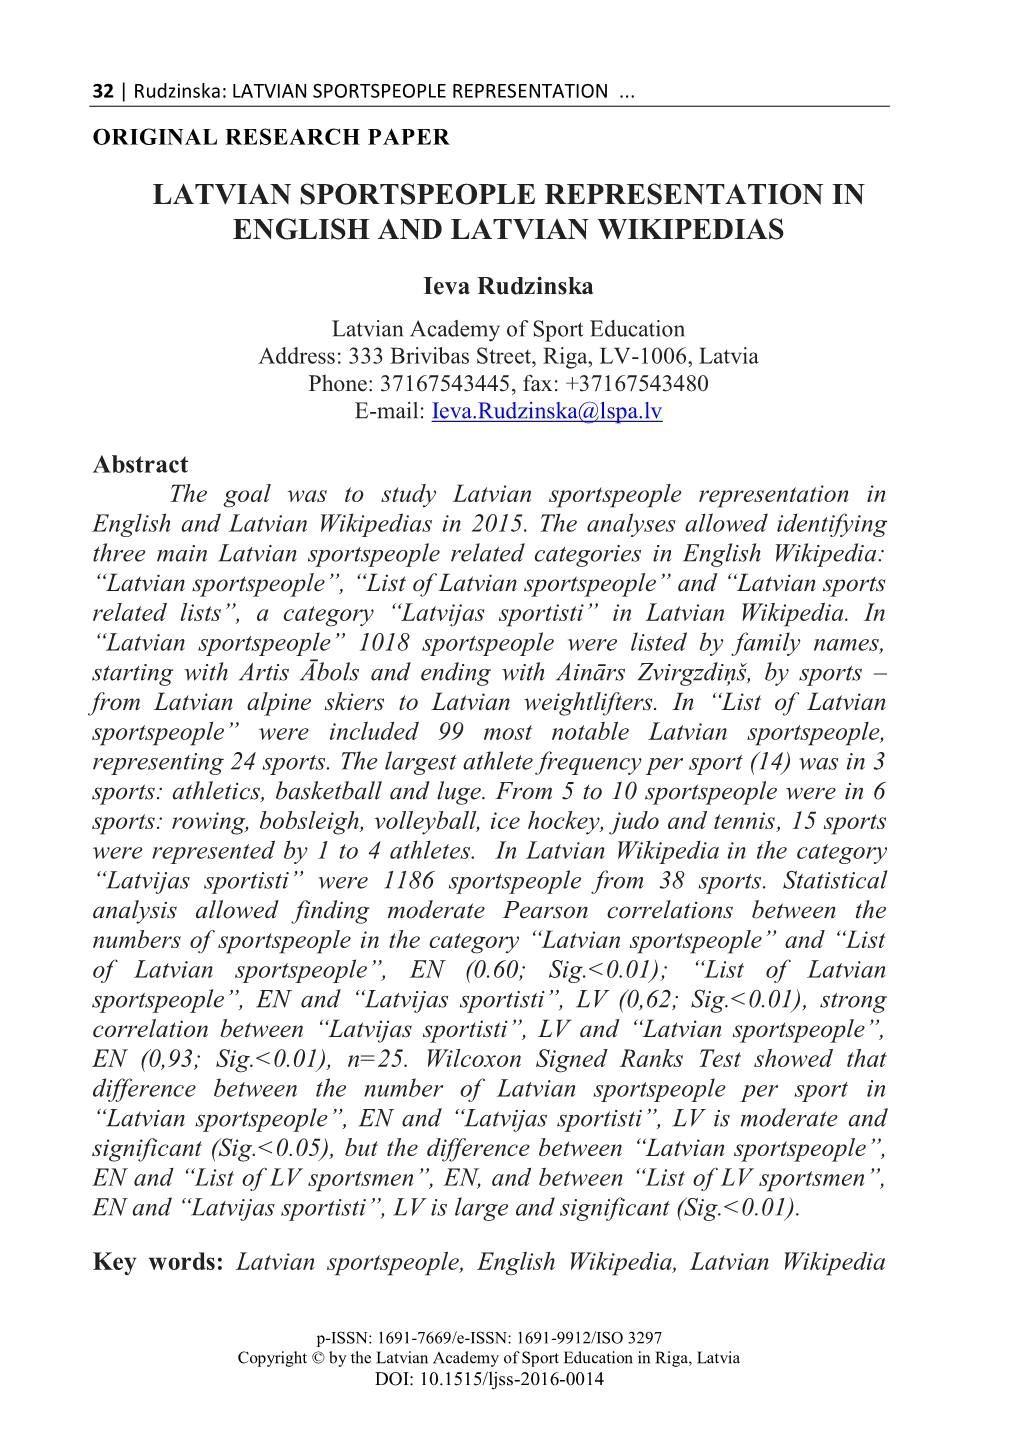 Latvian Sportspeople Representation in English and Latvian Wikipedias